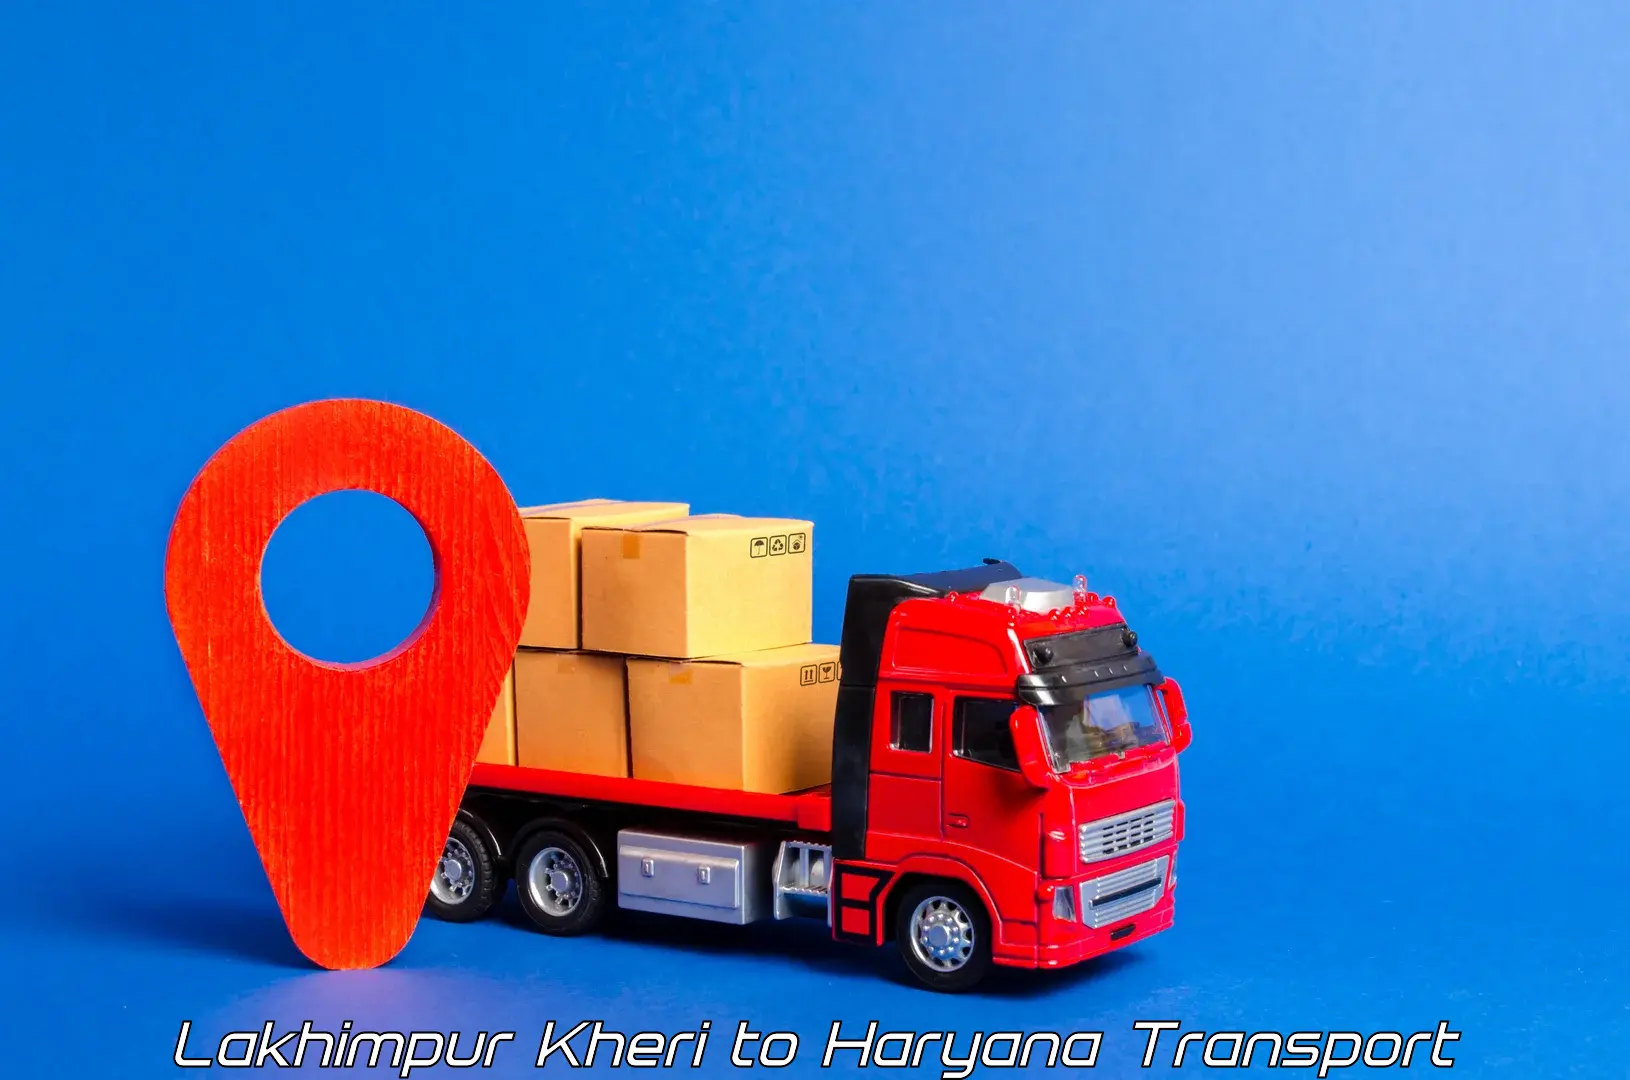 Truck transport companies in India Lakhimpur Kheri to Faridabad